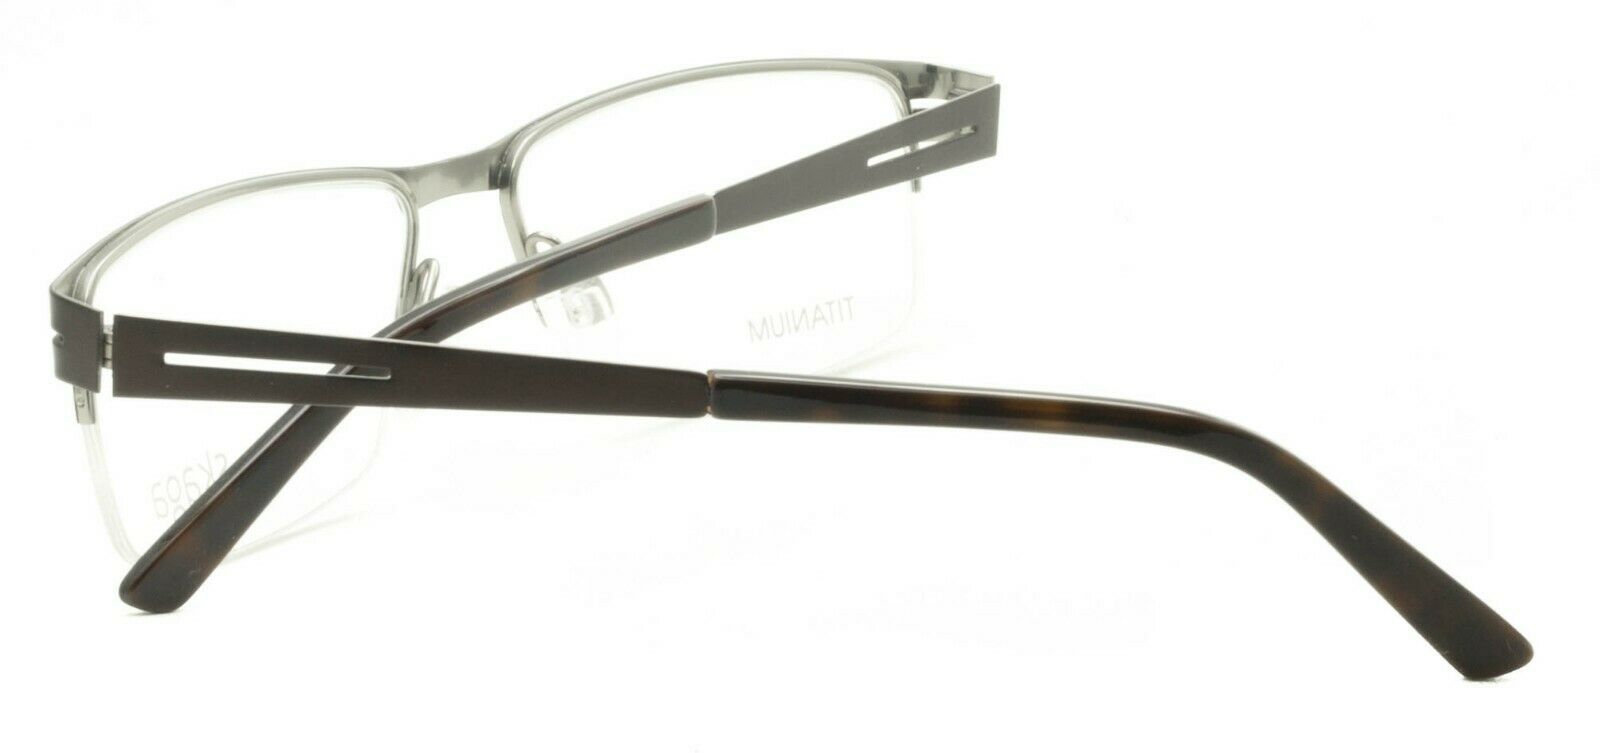 SKAGA SWEDEN 3750 TOMAS 5201 55mm Glasses RX Optical Eyeglasses Eyewear - New